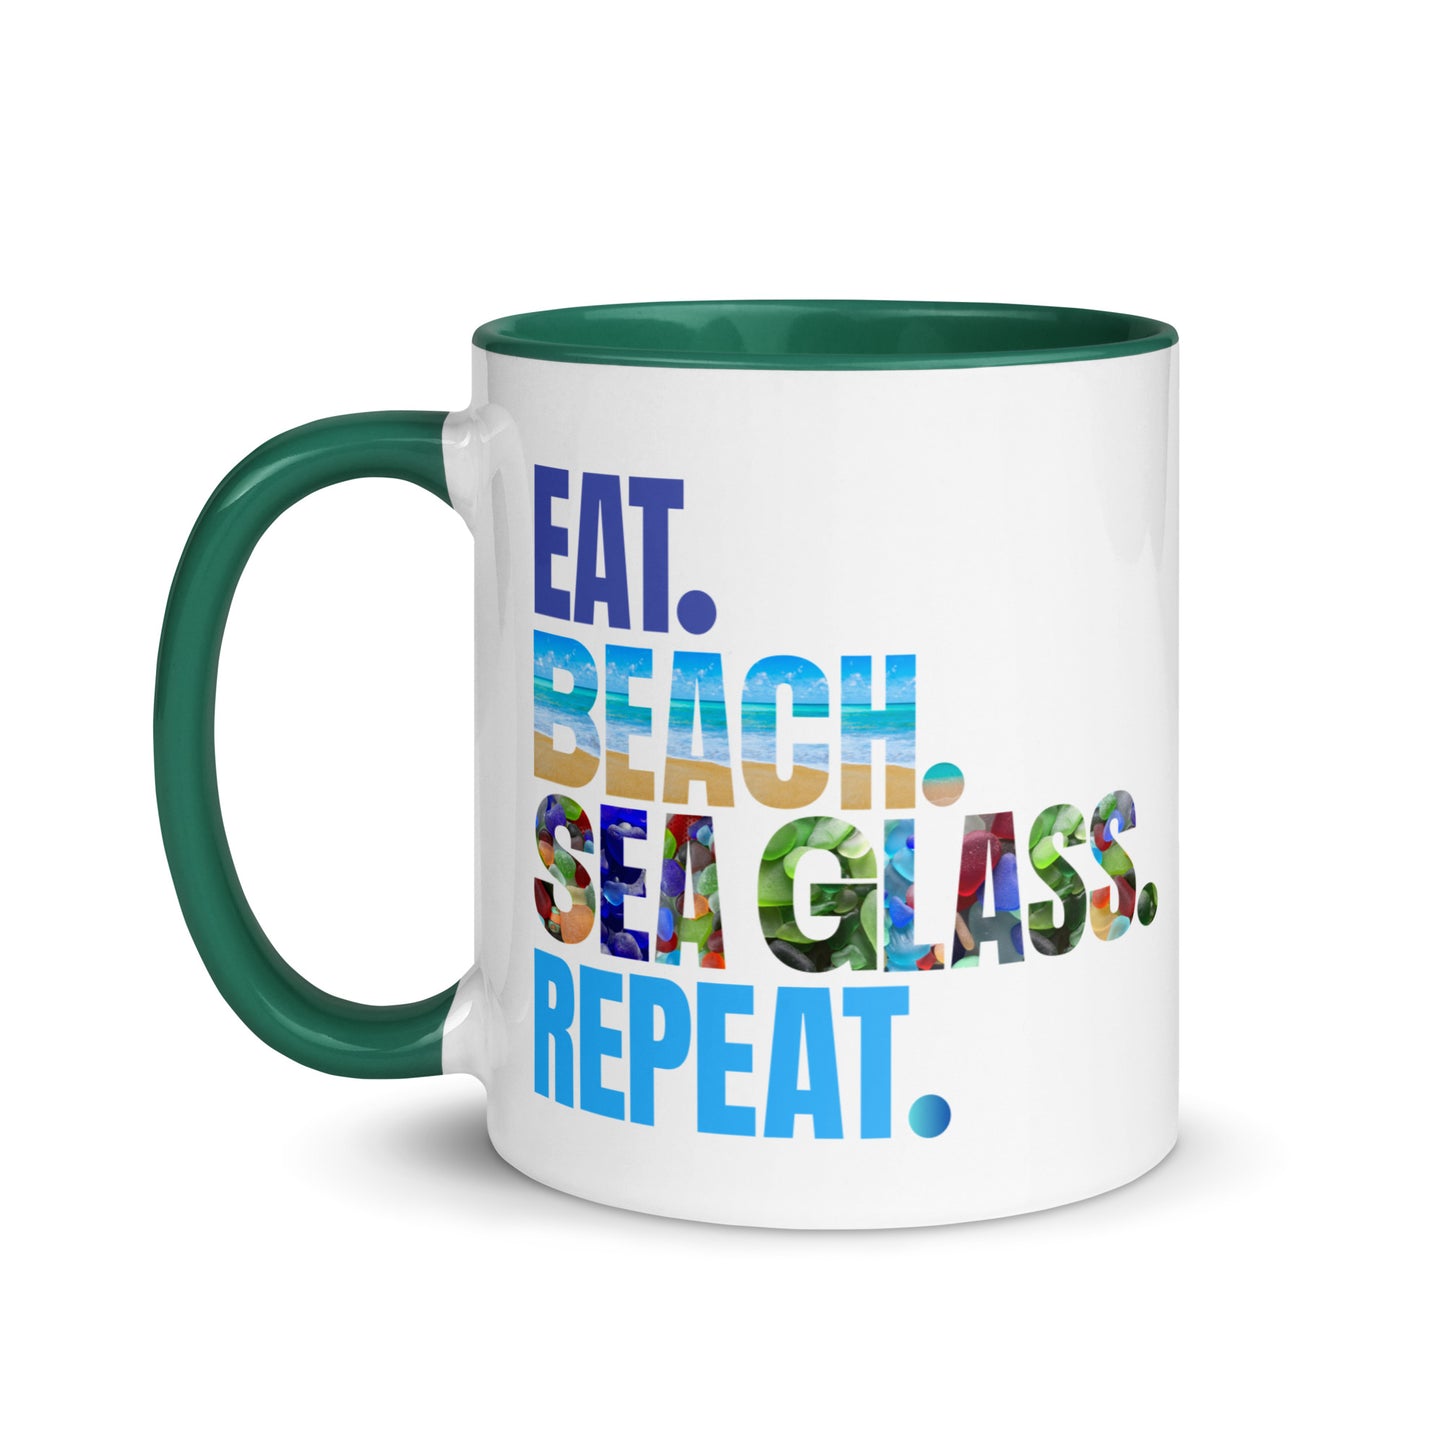 Mug with Color Inside - Eat.Beach.Sea Glass.Repeat